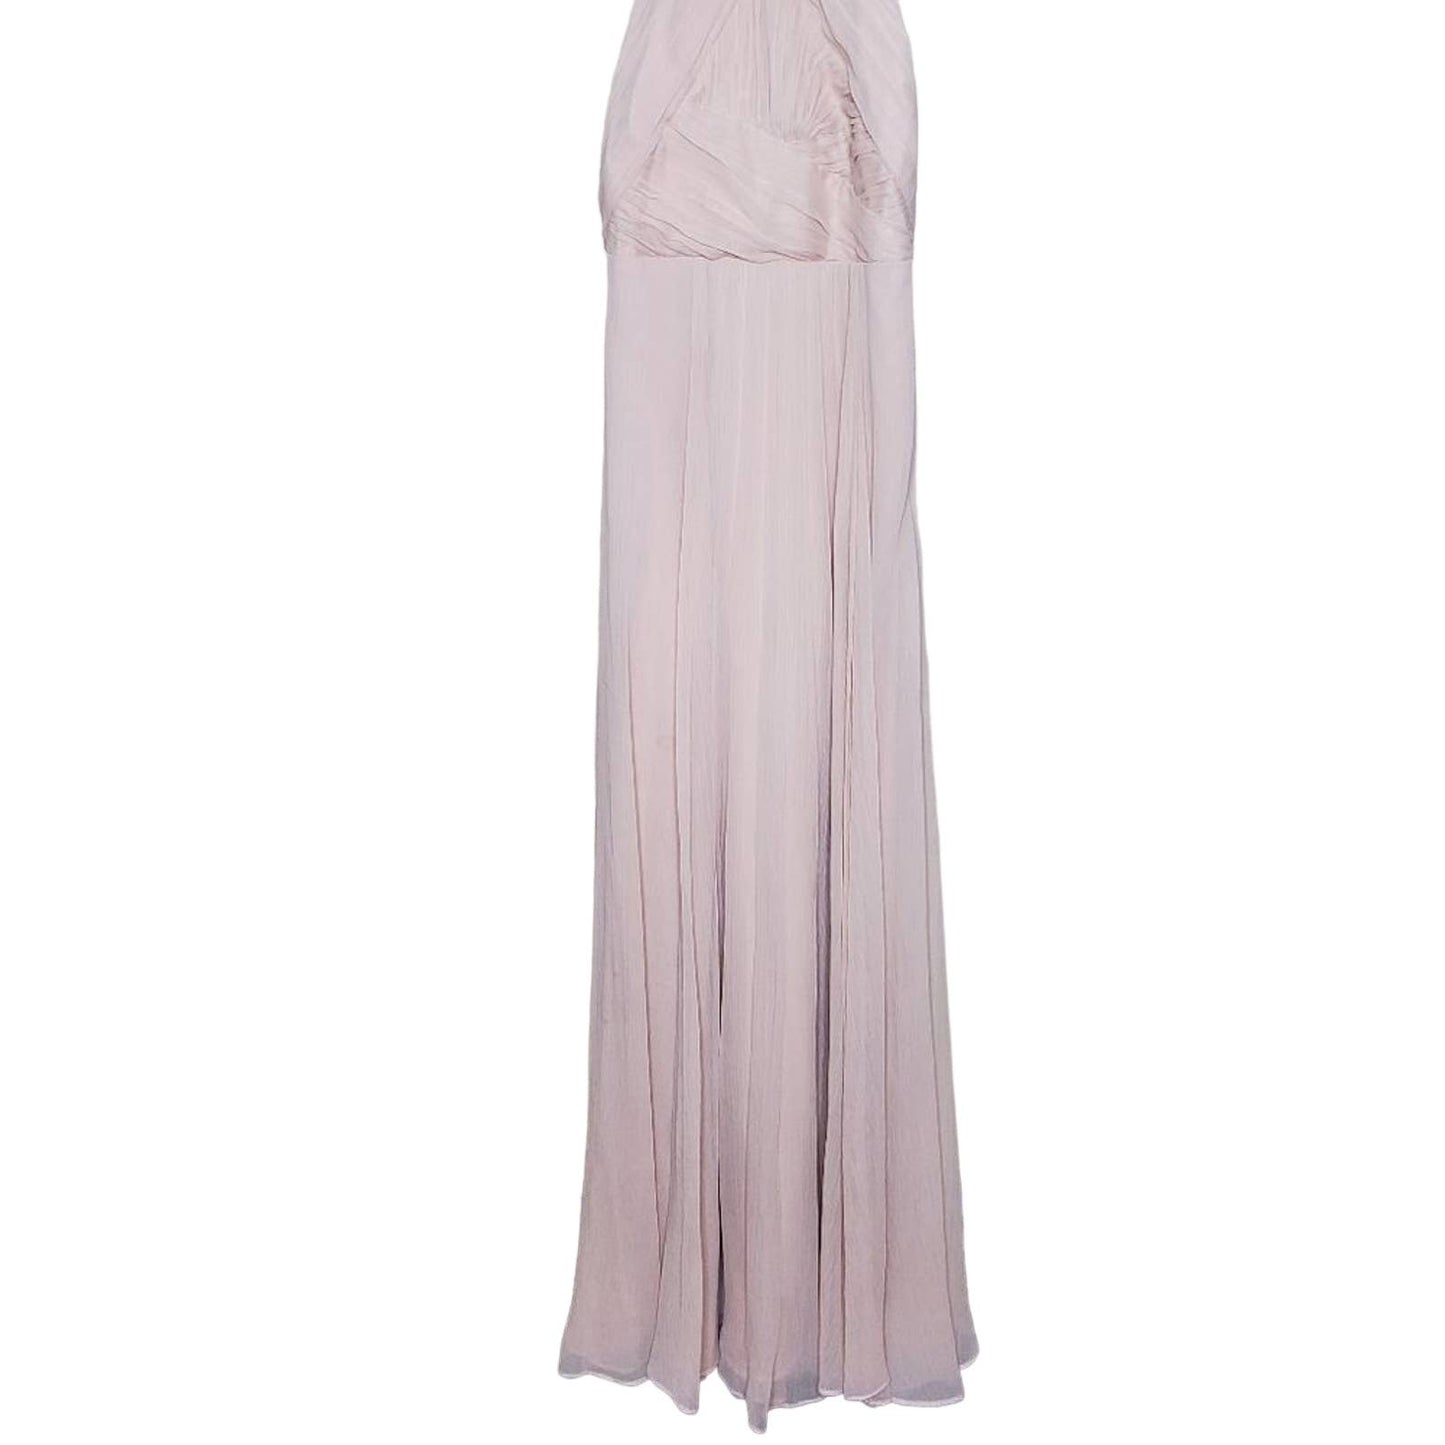 ASOS Blush Pink Long Sleeveless Flowy Dress, Size 4